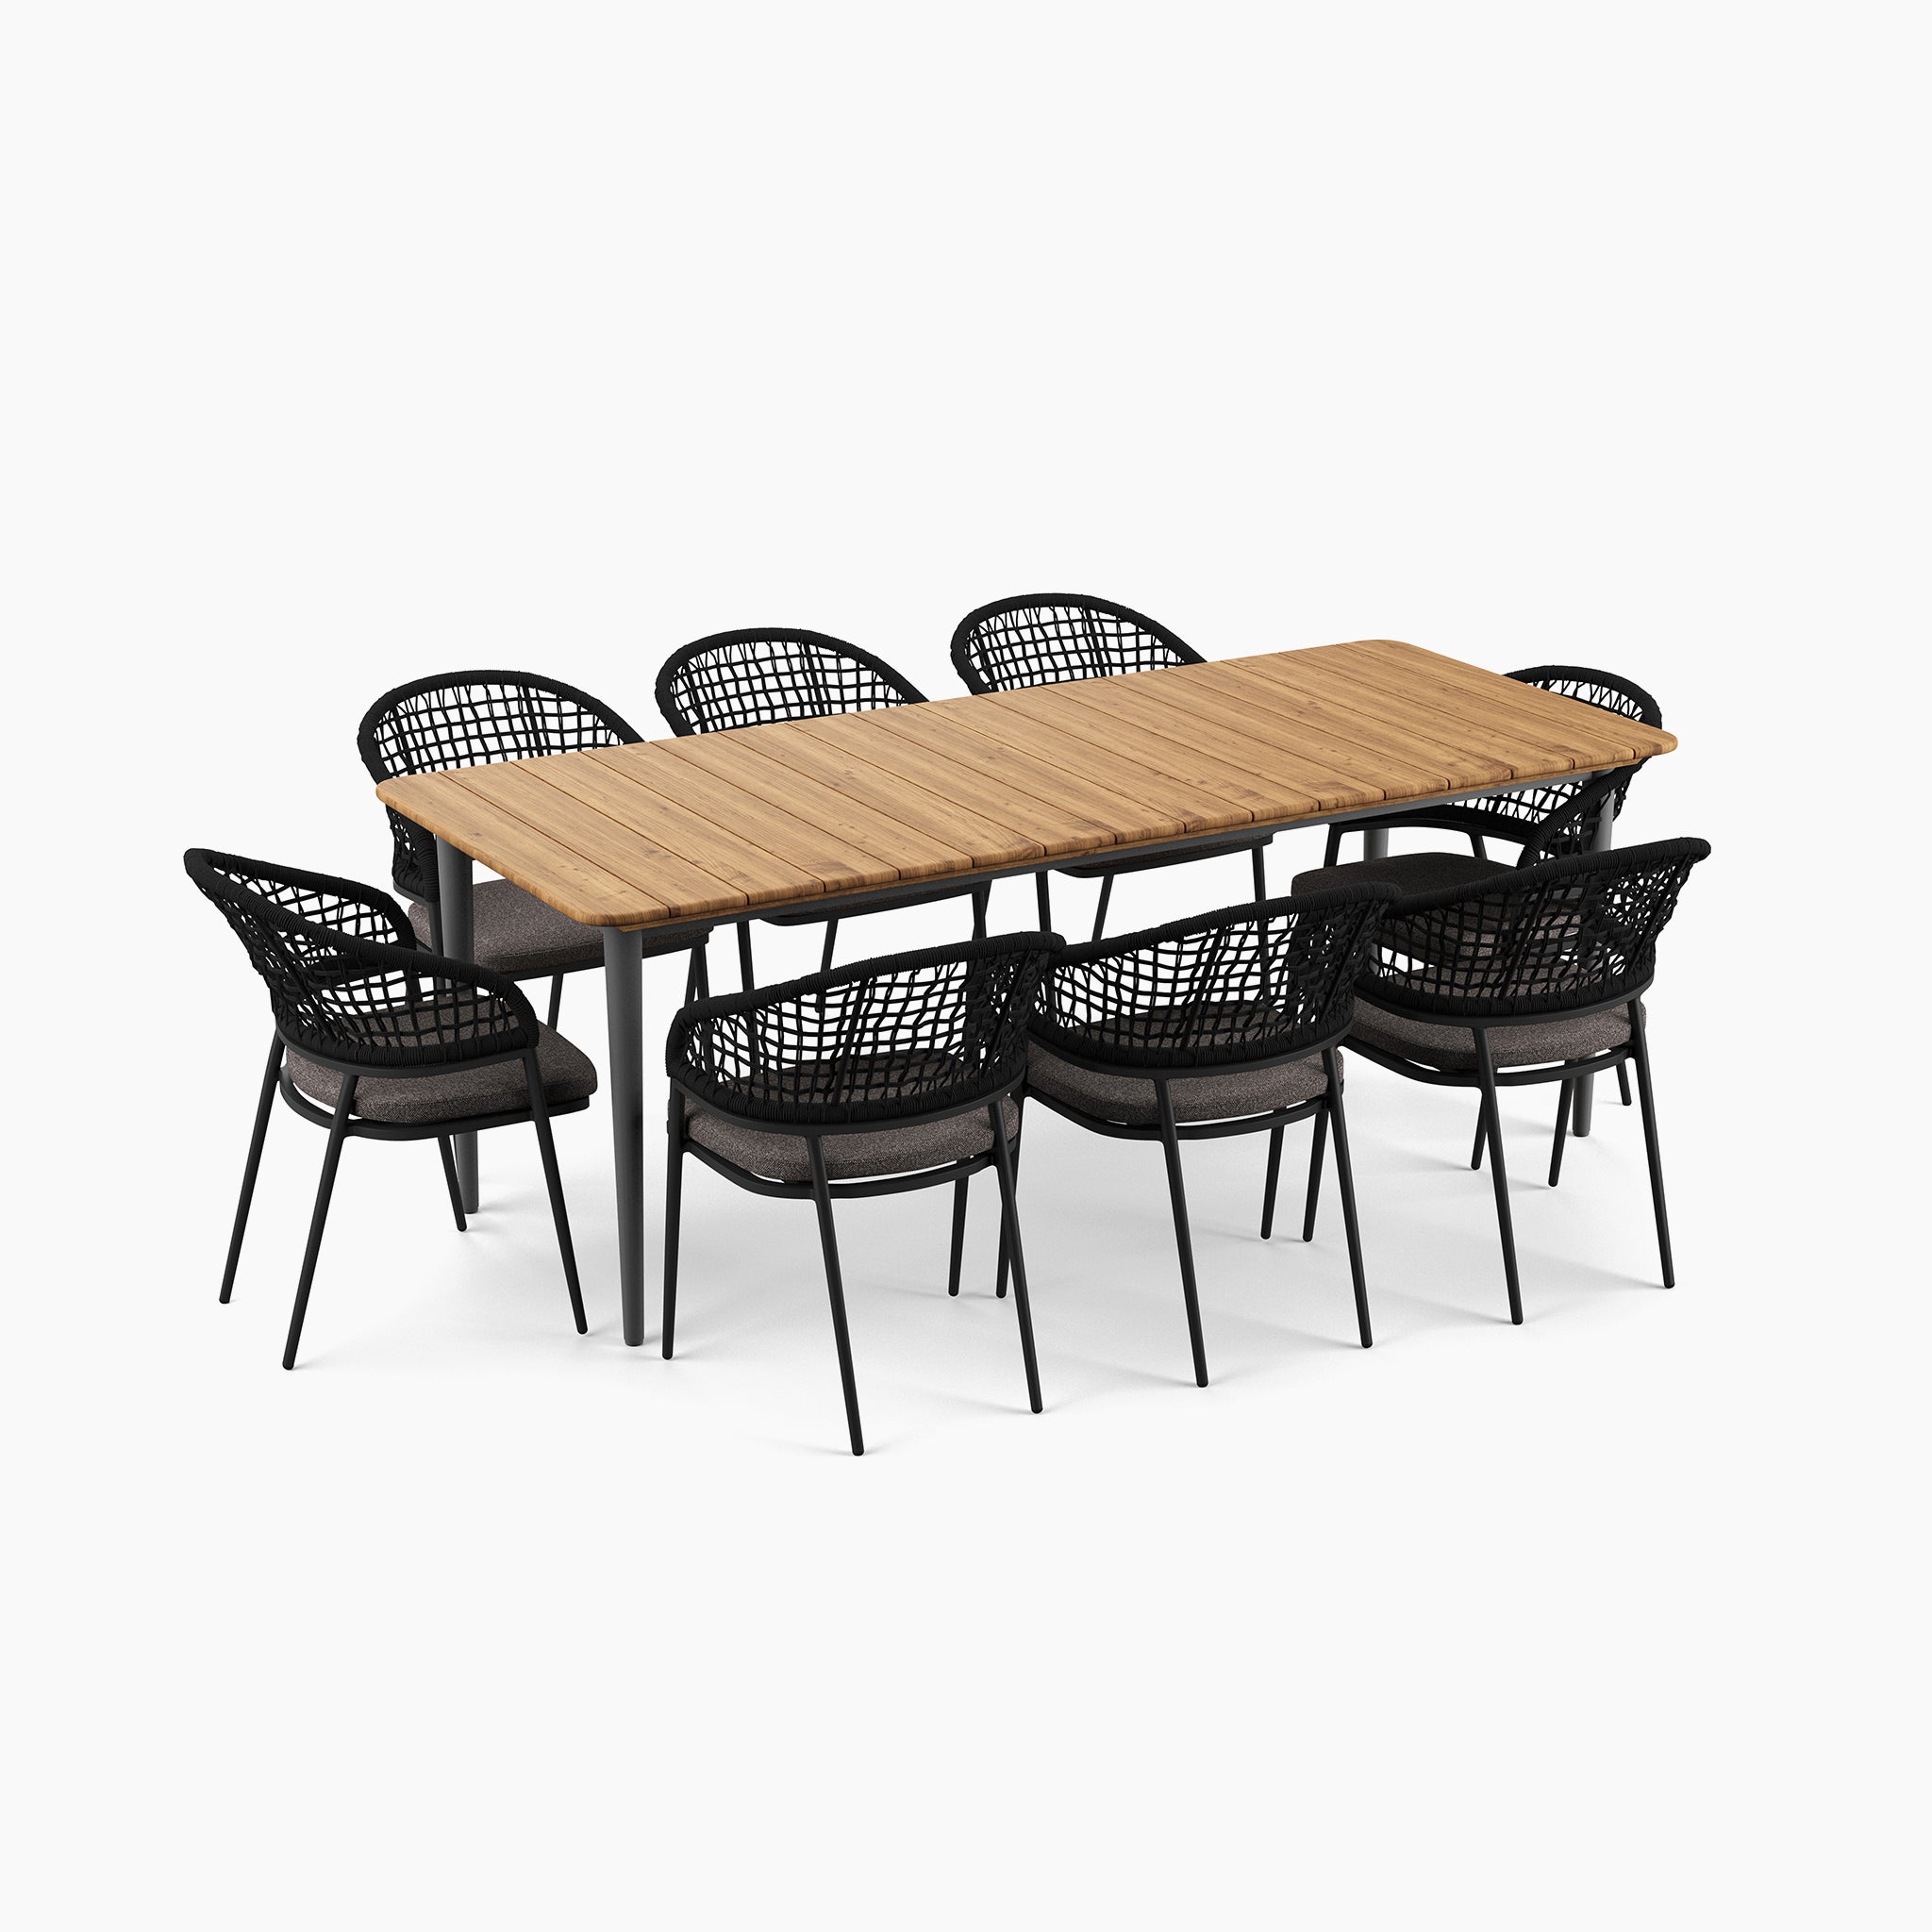 Kalama 8 Seat Rectangular Dining Set with Teak Table in Charcoal